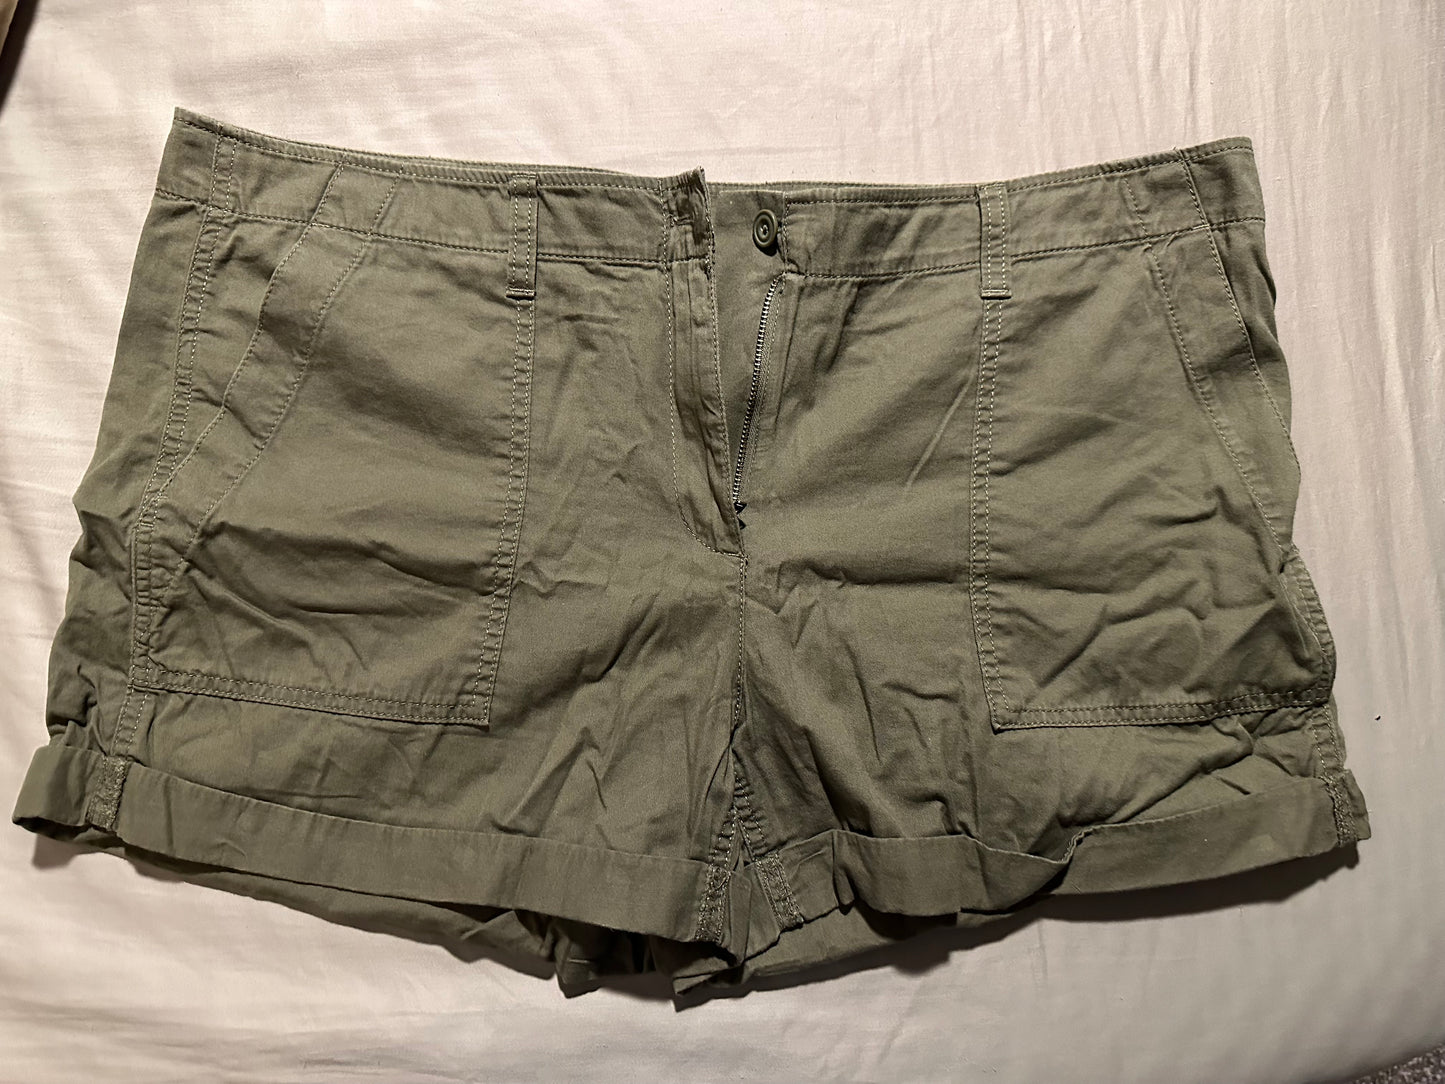 LOFT size 14 shorts